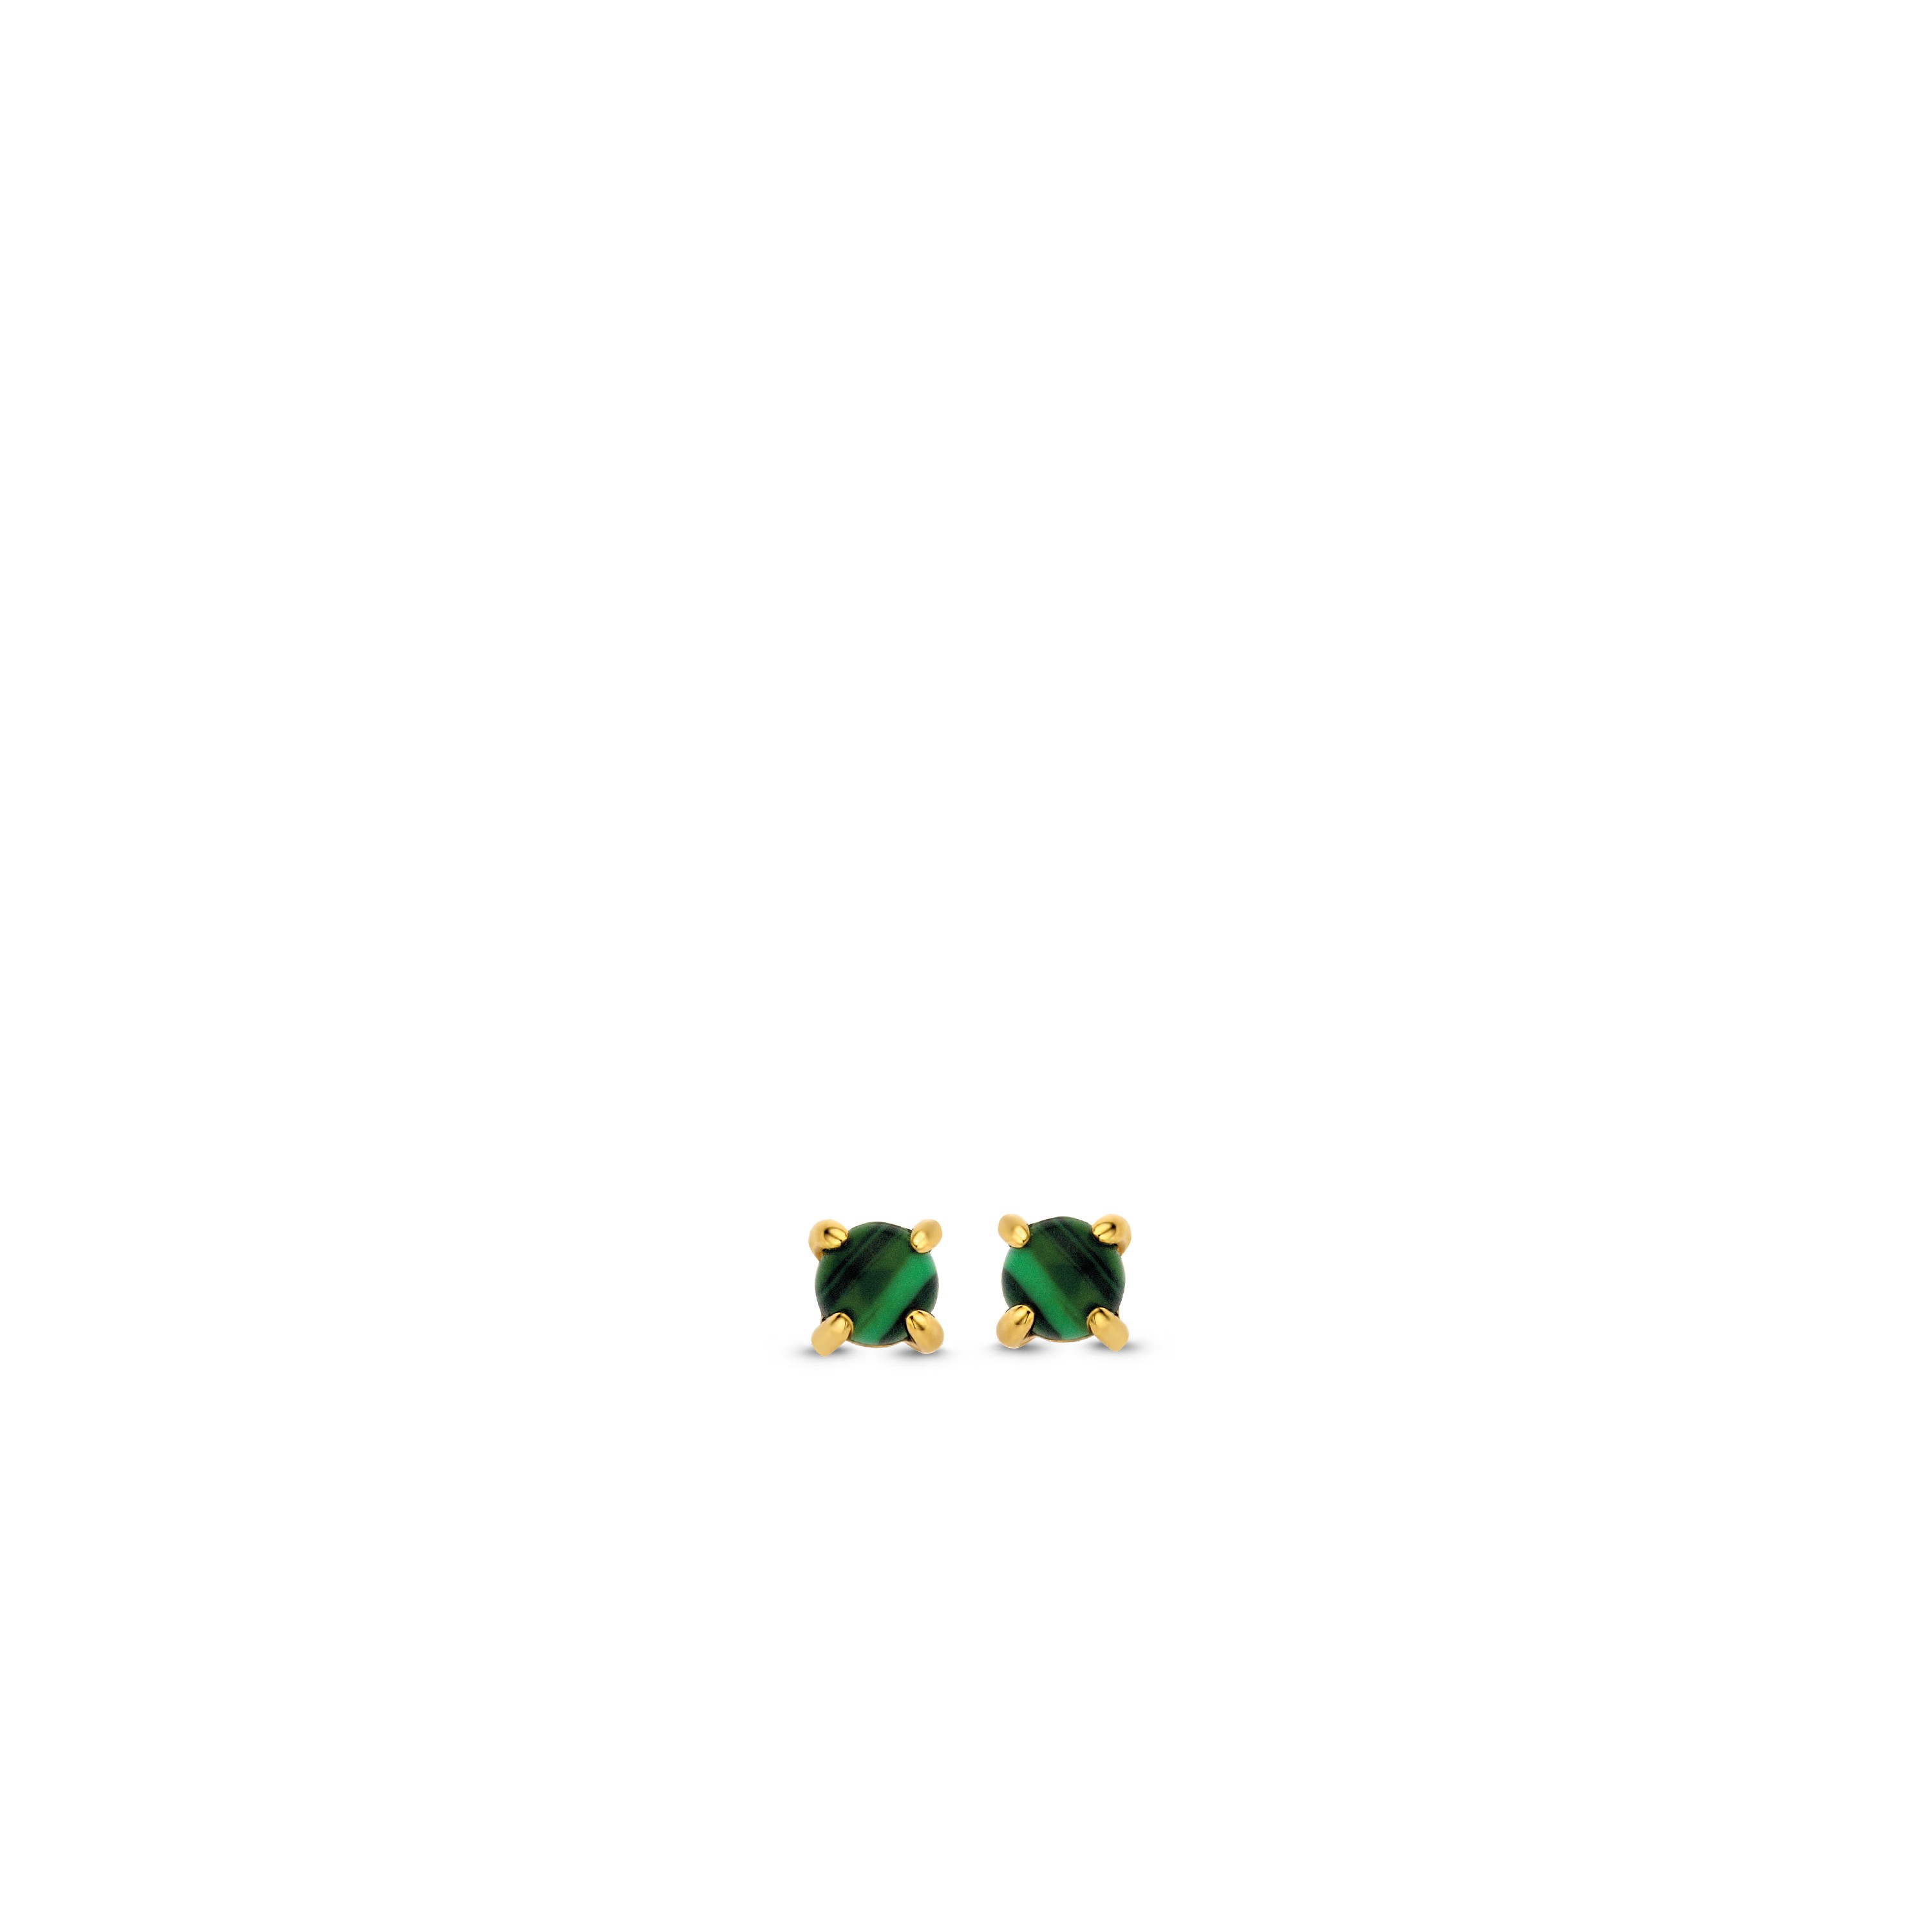 TI SENTO - Milano Earrings 7833MA Image 2 Trinity Jewelers  Pittsburgh, PA